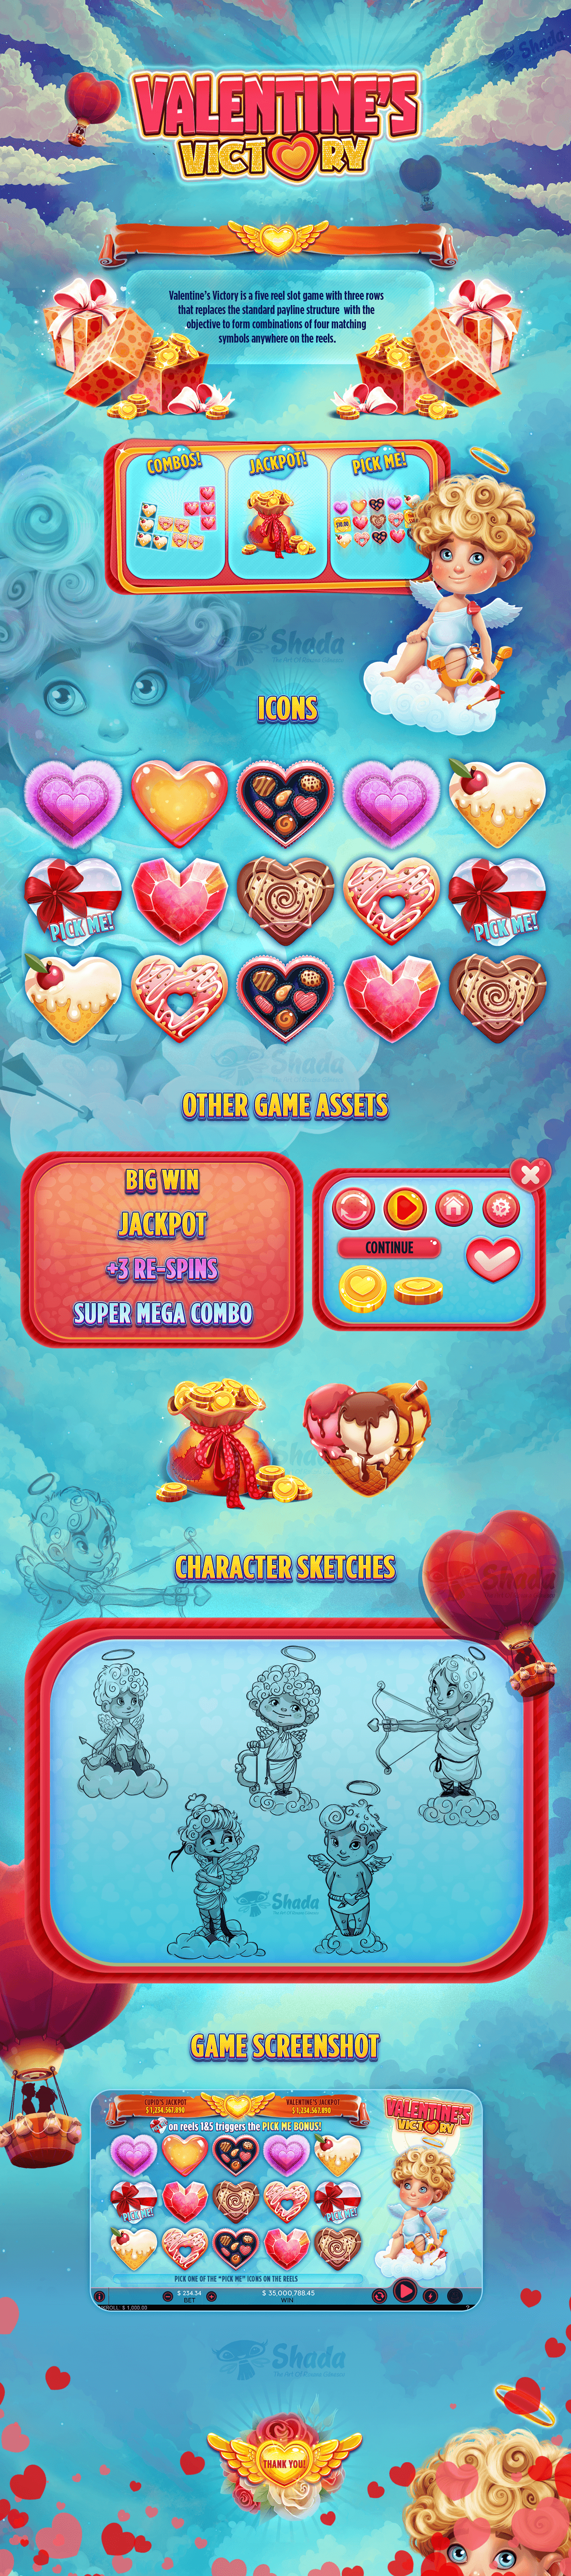 valentines day valentines victory videoslots Slots casino JackPot cartoon game ui icons